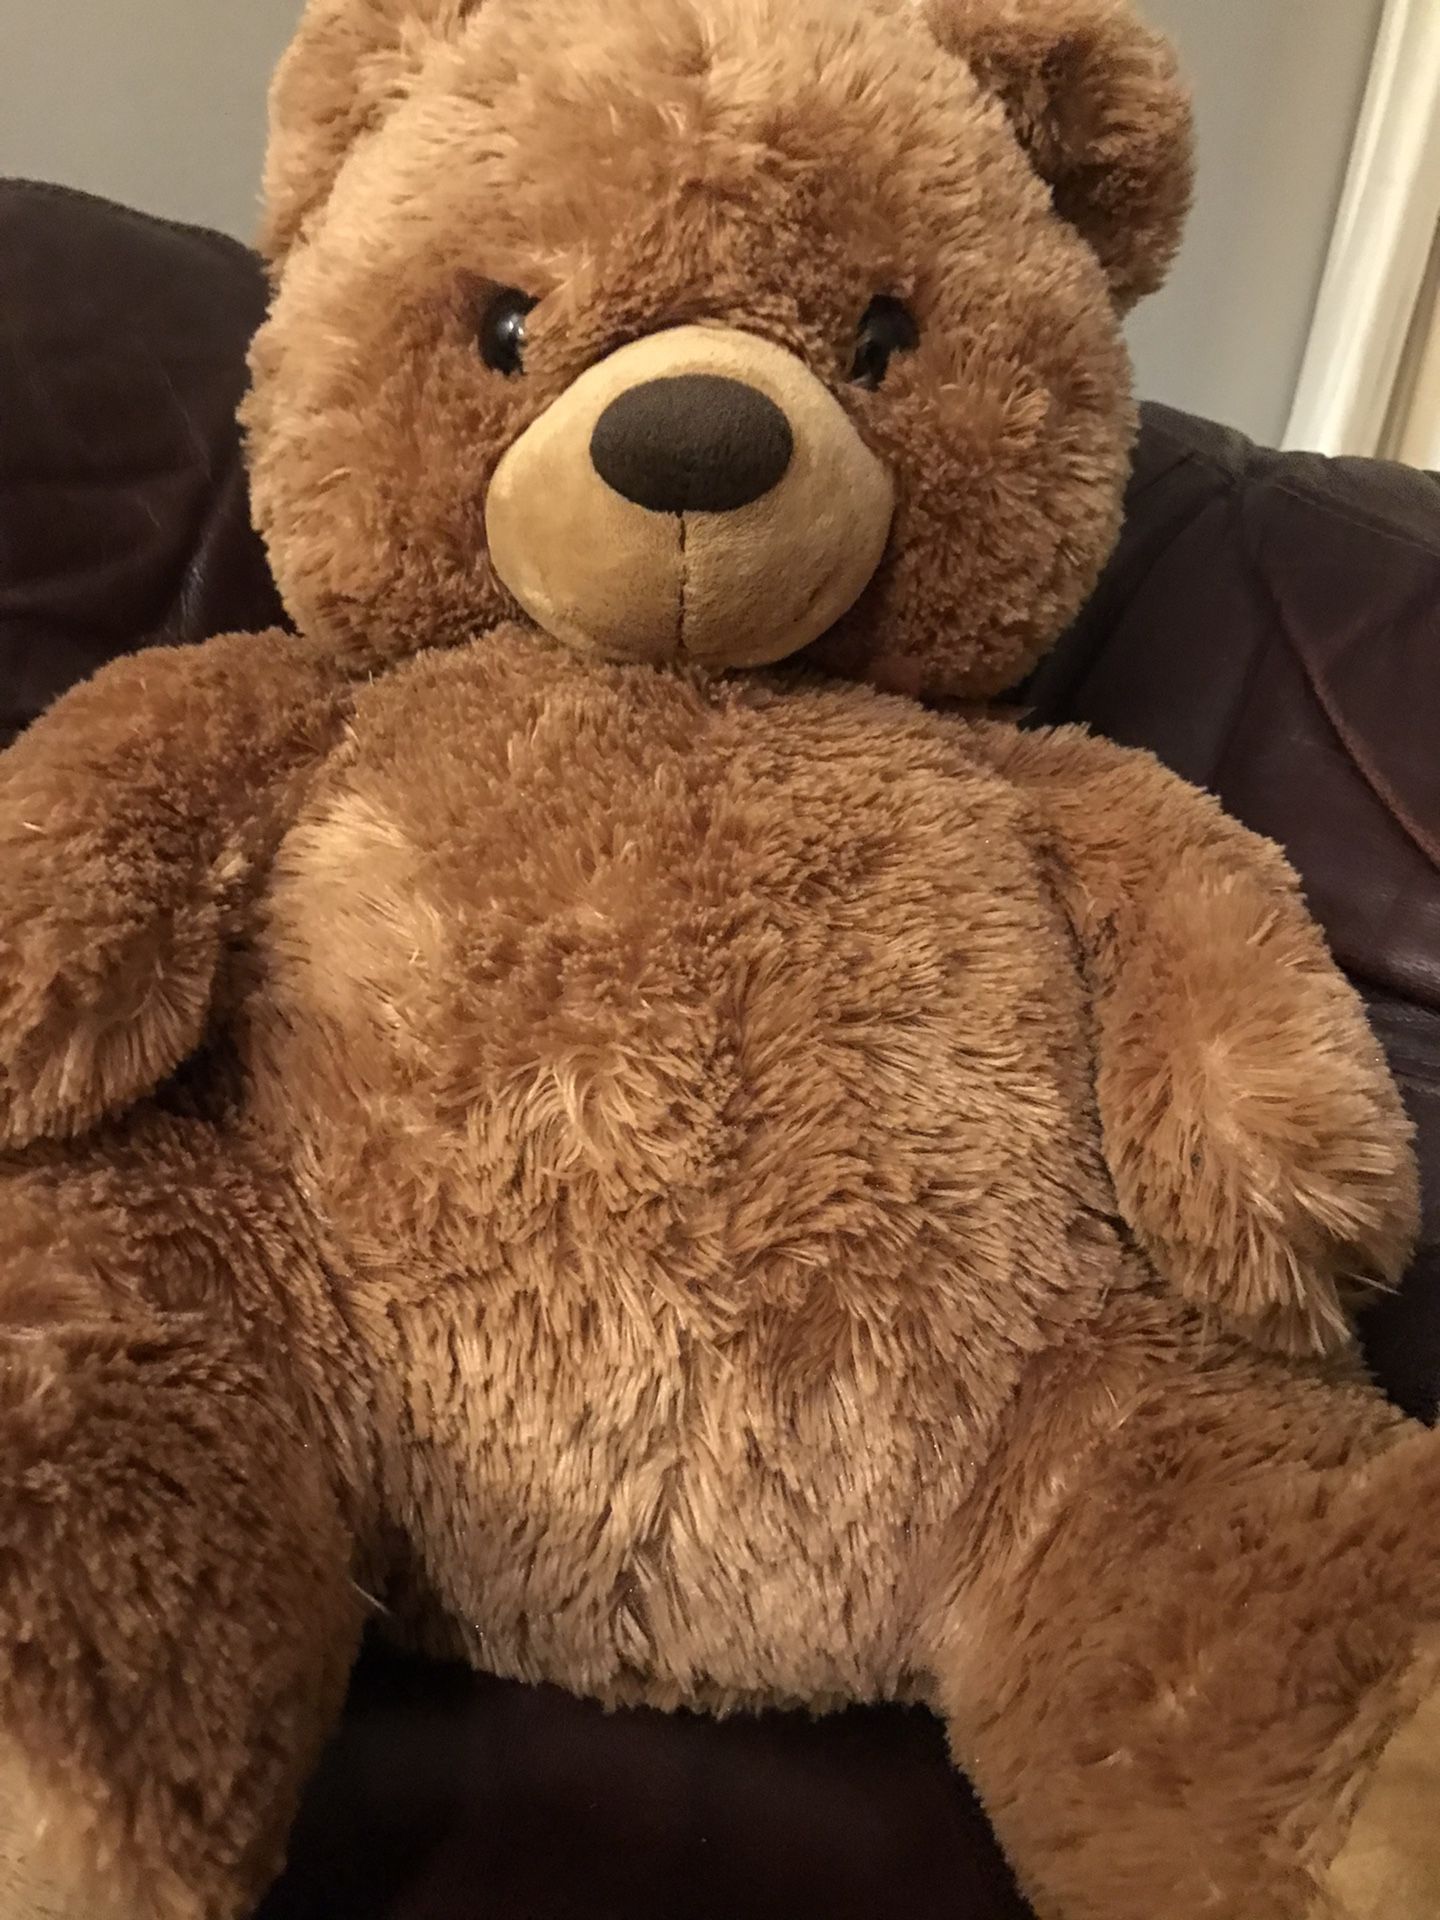 Big 28” teddy bear